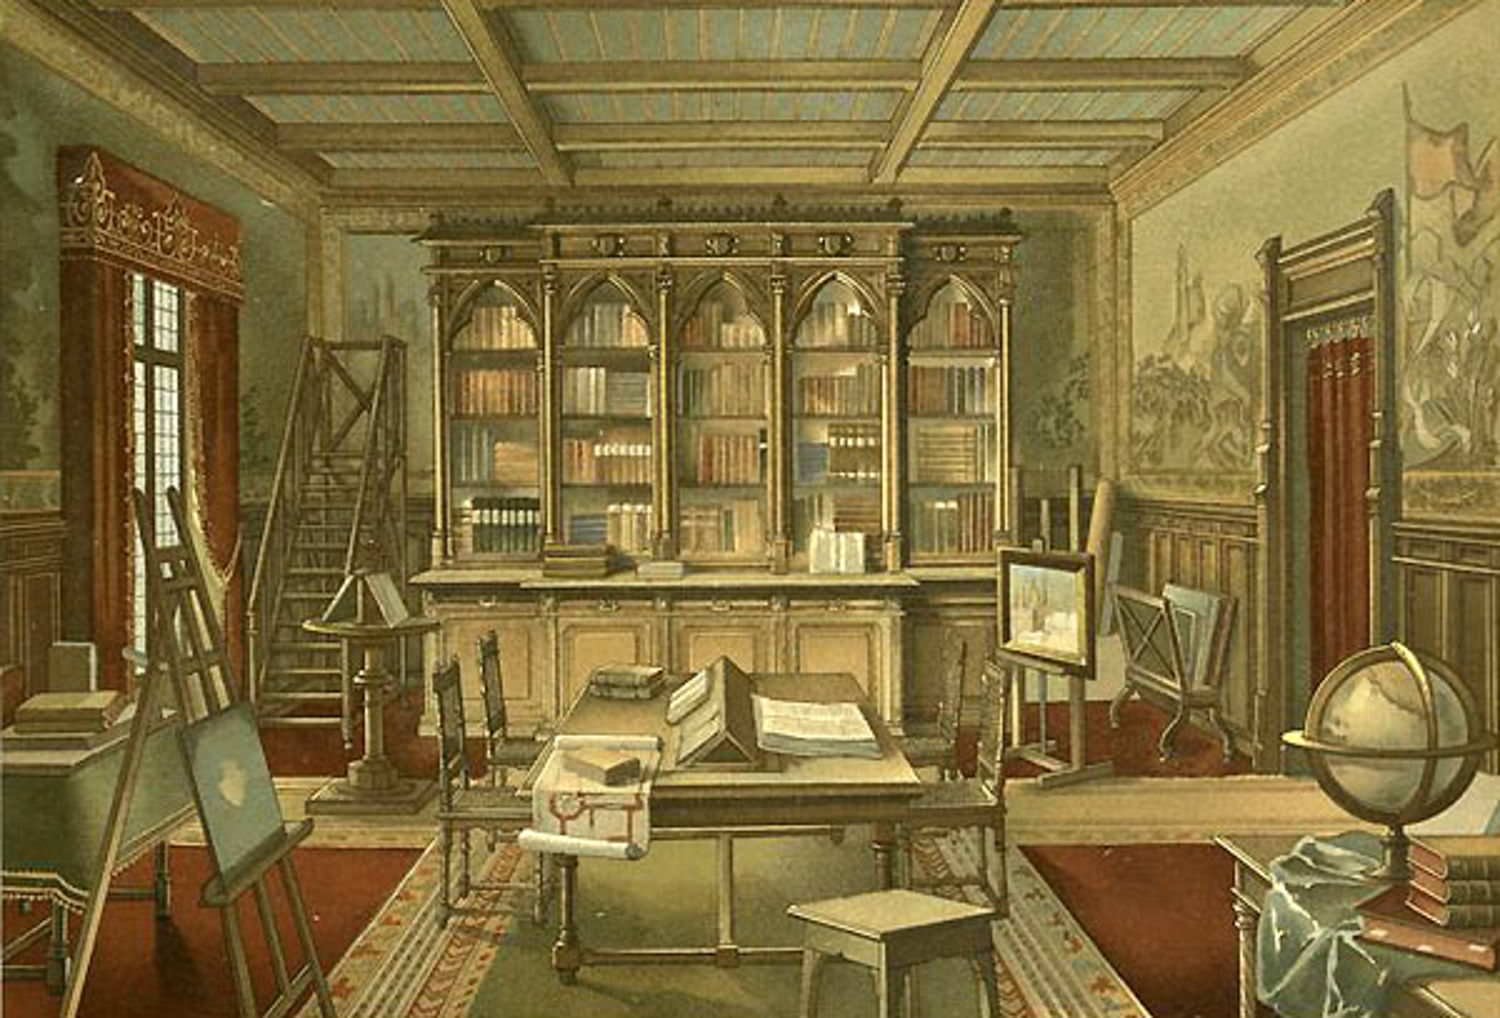 Кабинет 18 века. Библиотека Англии 16 век. Интерьер XVI-XVII века Западная Европа. Библиотека 19 век Англия. Мастерская художника 19 век Англия.